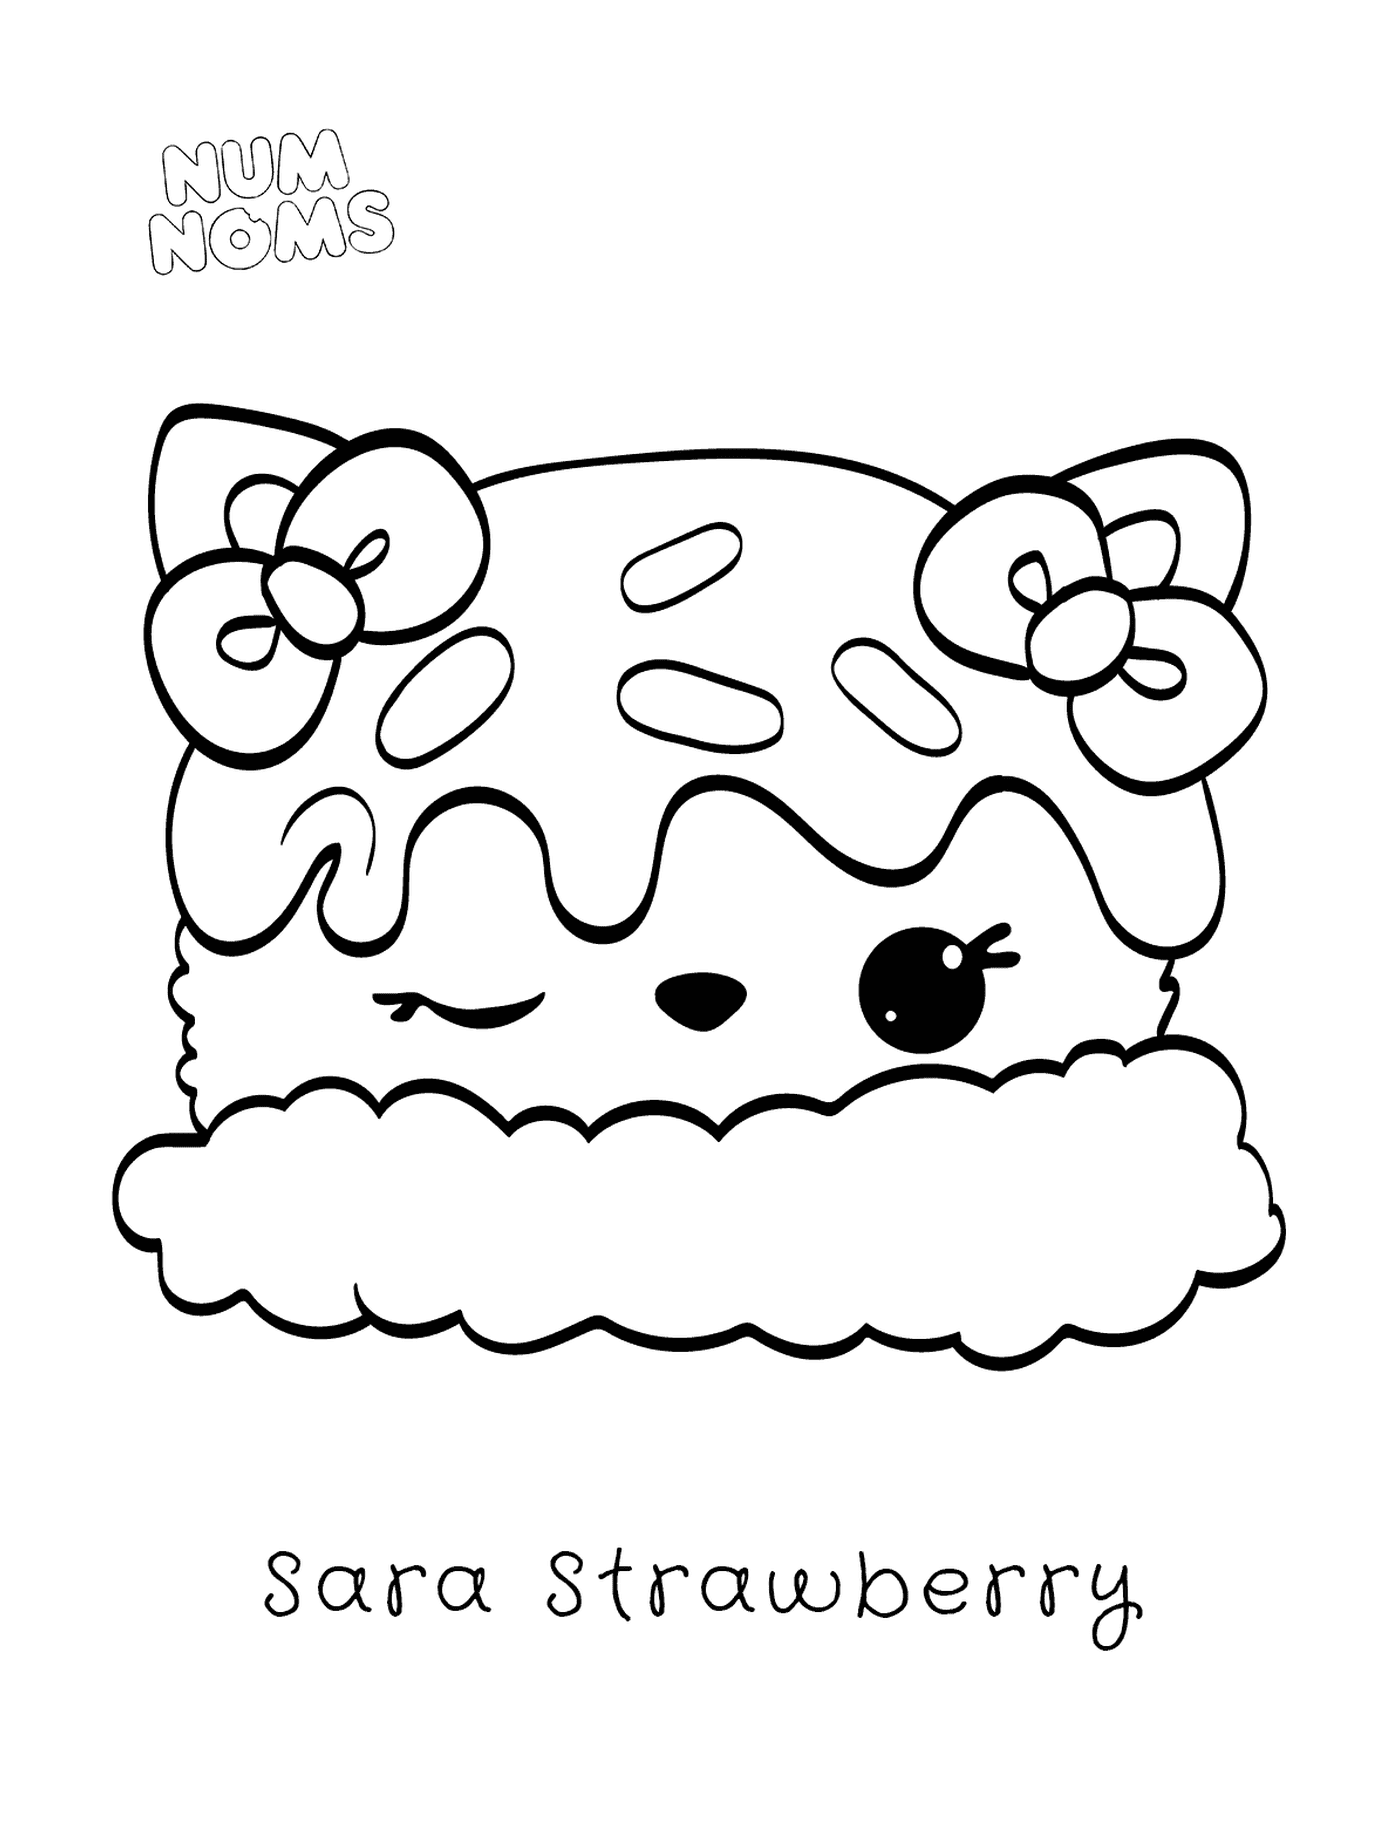  Strawberry Sara, a delight 